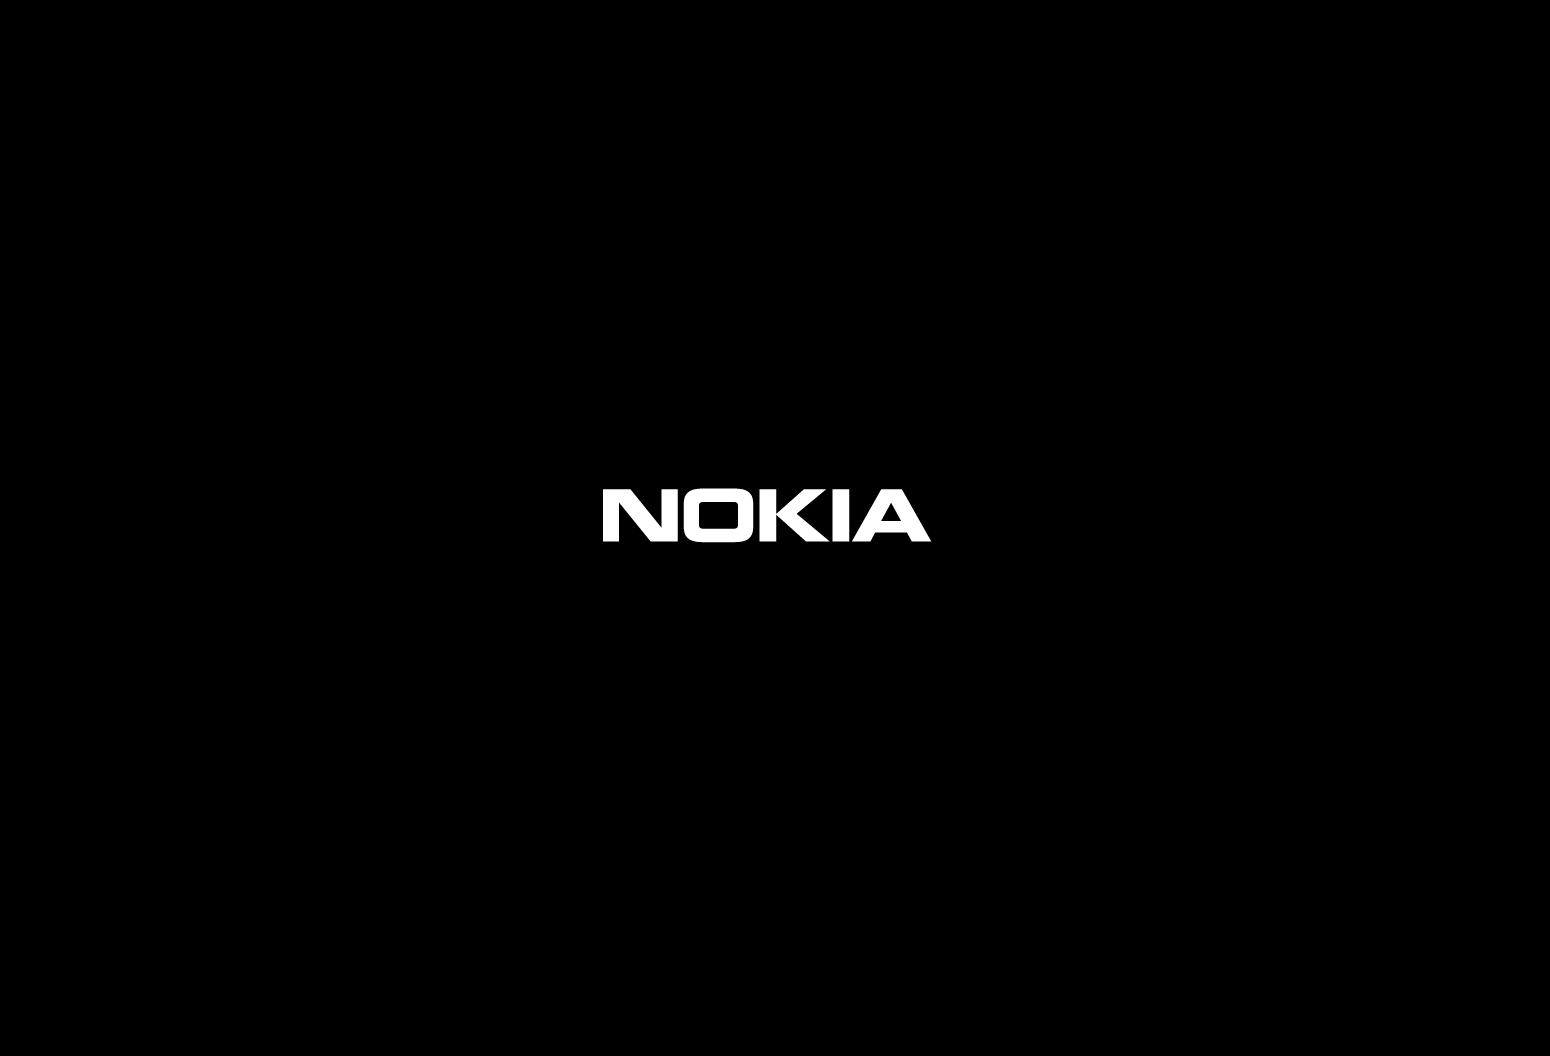 Nokia Black Wallpapers - Top Free Nokia Black Backgrounds - WallpaperAccess